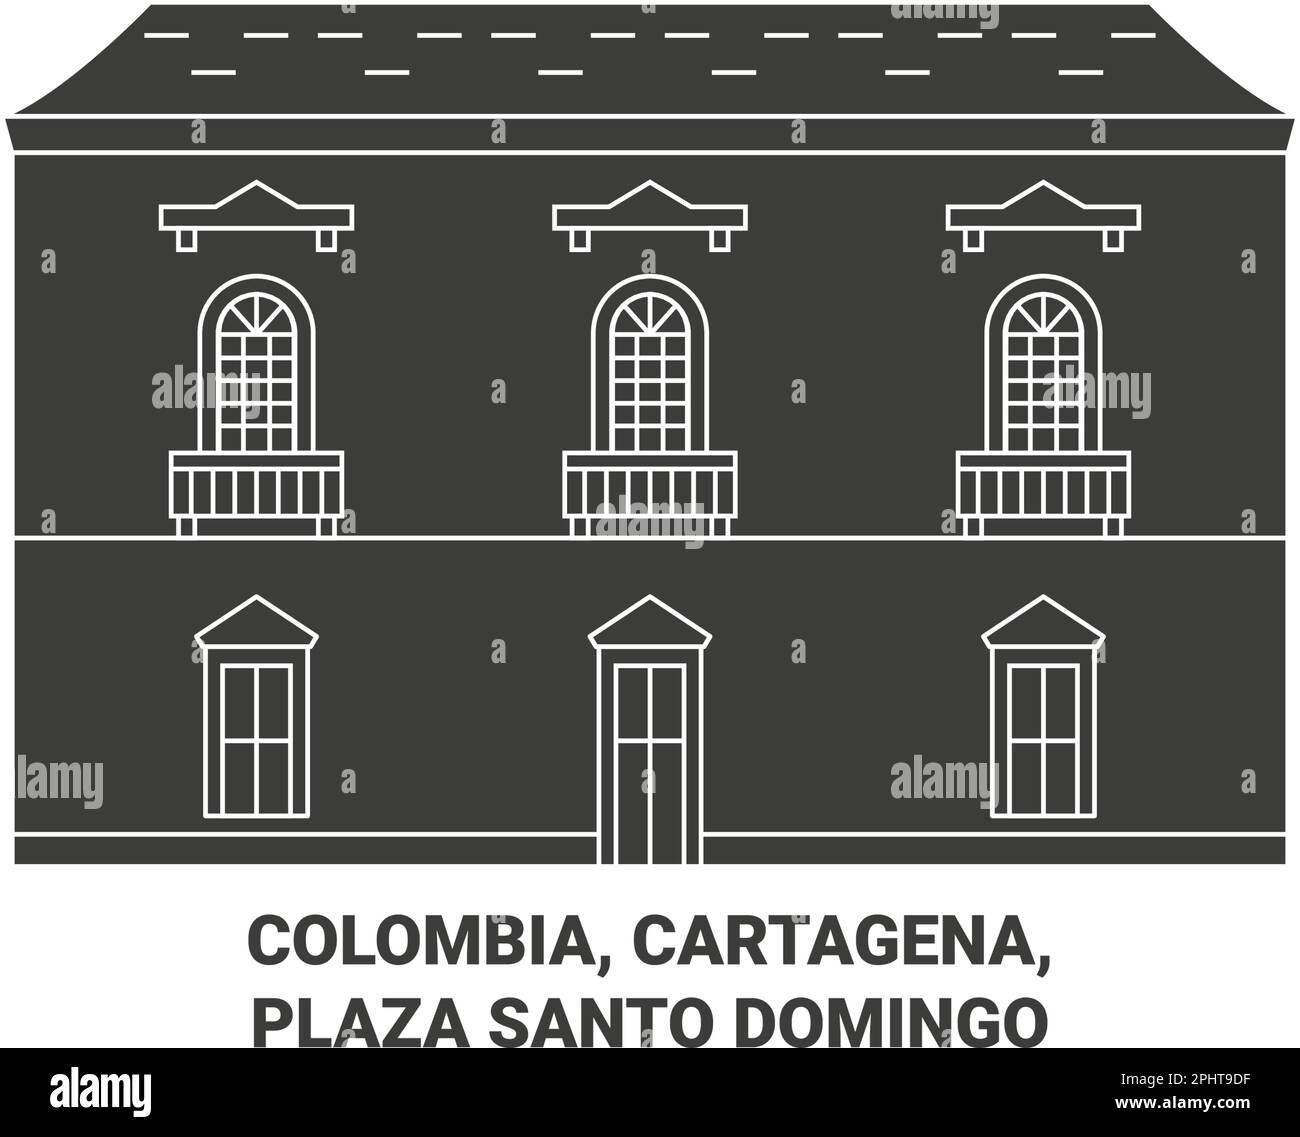 Kolumbien, Cartagena, Plaza Santo Domingo reisen als Vektordarstellung Stock Vektor